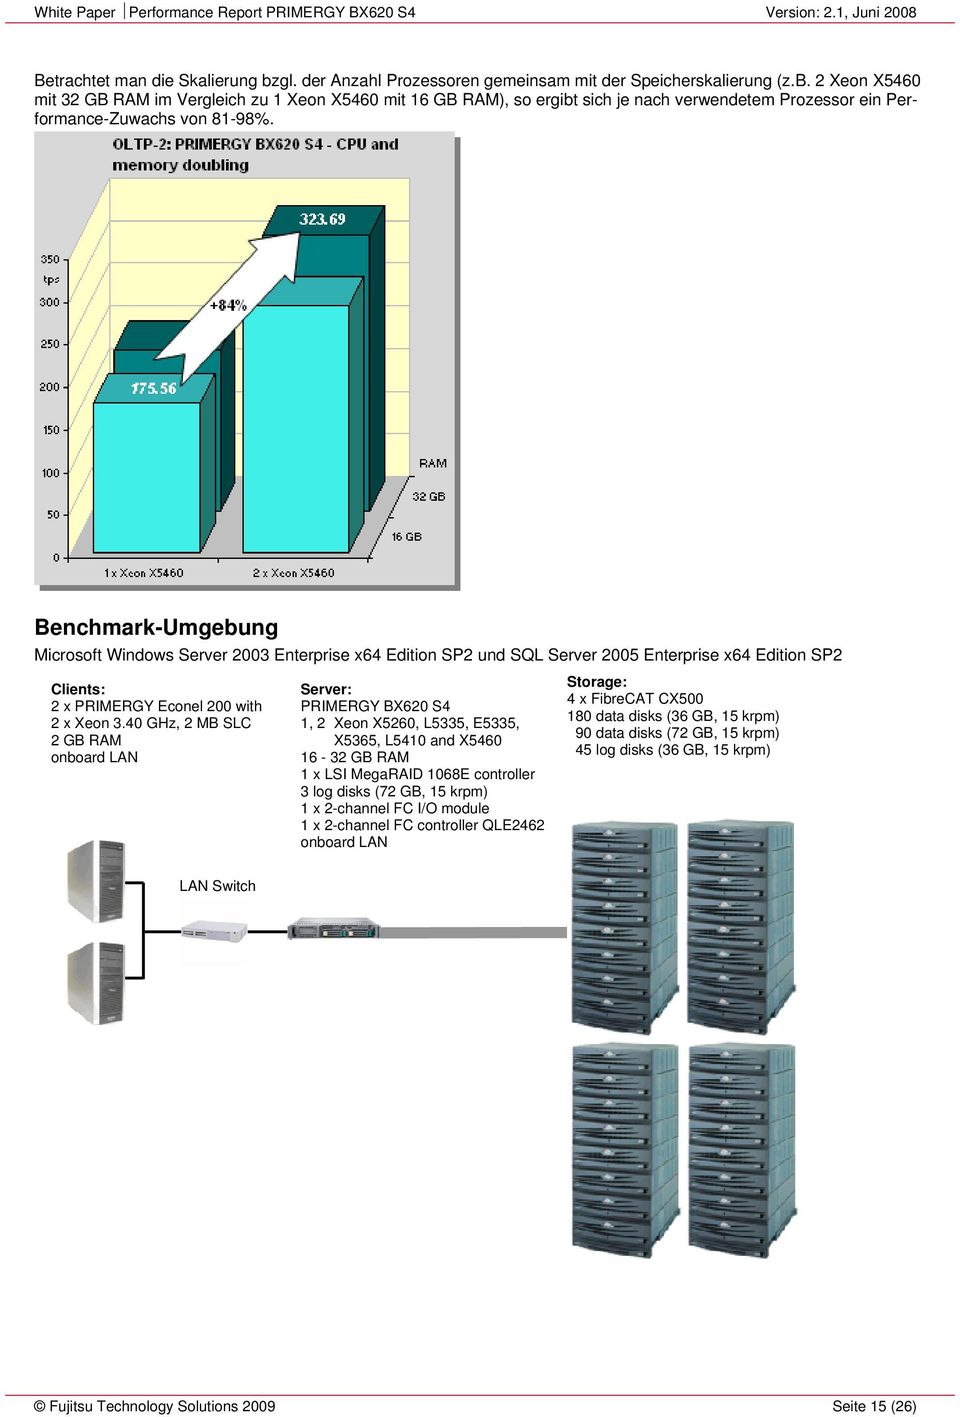 40 GHz, 2 MB SLC 2 GB RAM onboard LAN Server: PRIMERGY BX620 S4 1, 2 Xeon X5260, L5335, E5335, X5365, L5410 and X5460 16-32 GB RAM 1 x LSI MegaRAID 1068E controller 3 log disks (72 GB, 15 krpm) 1 x